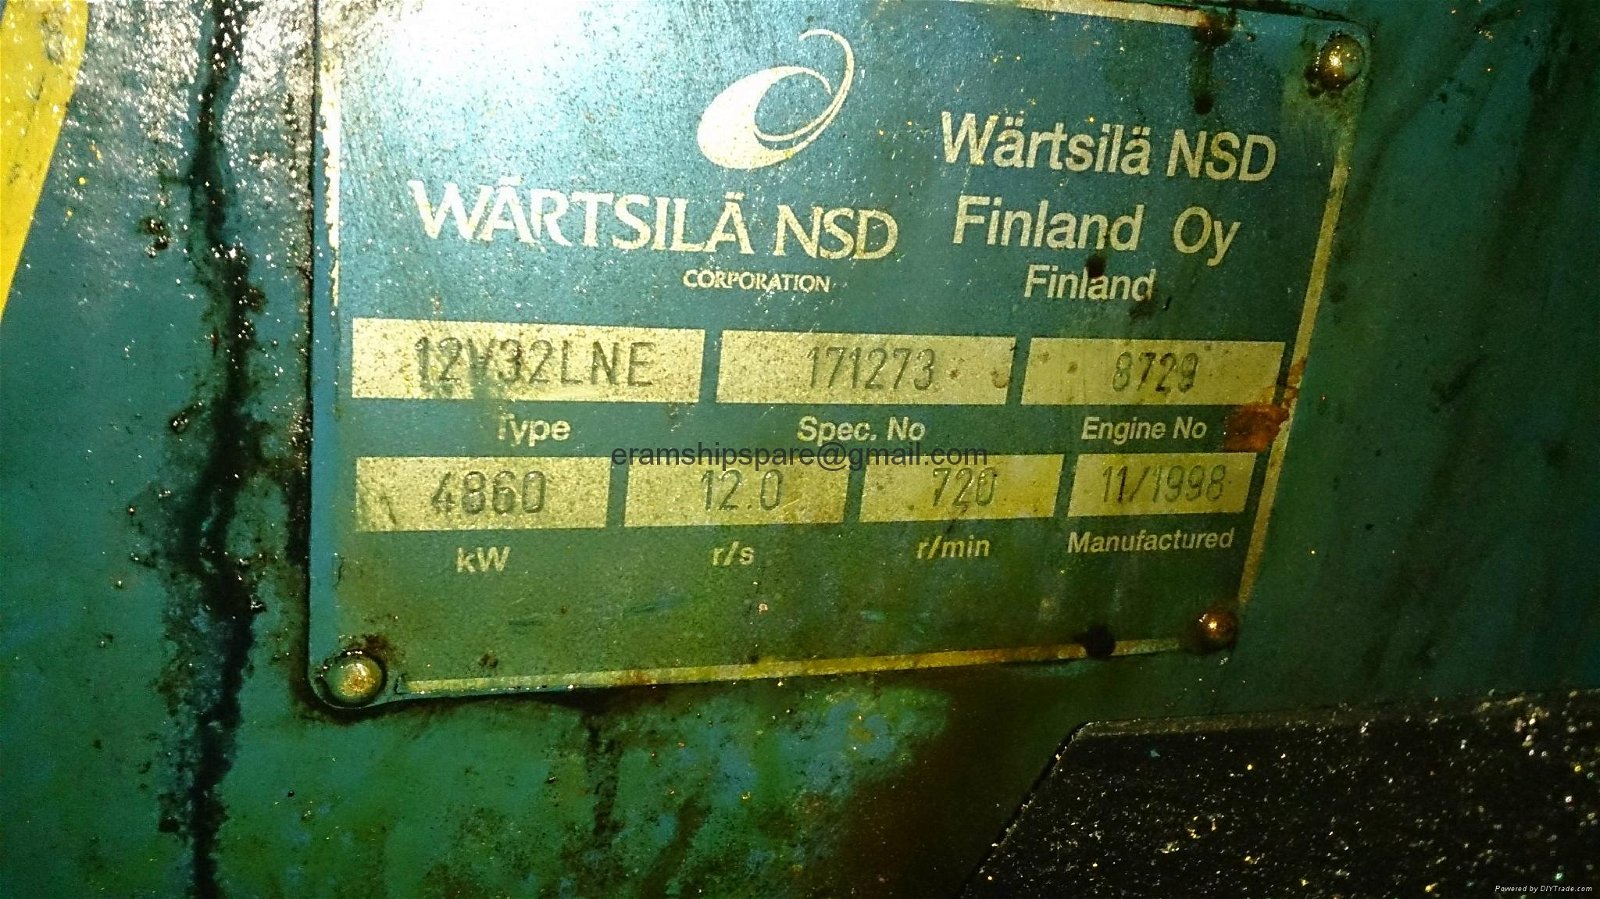 USED WARTSILA DIESEL ENGINE. 2